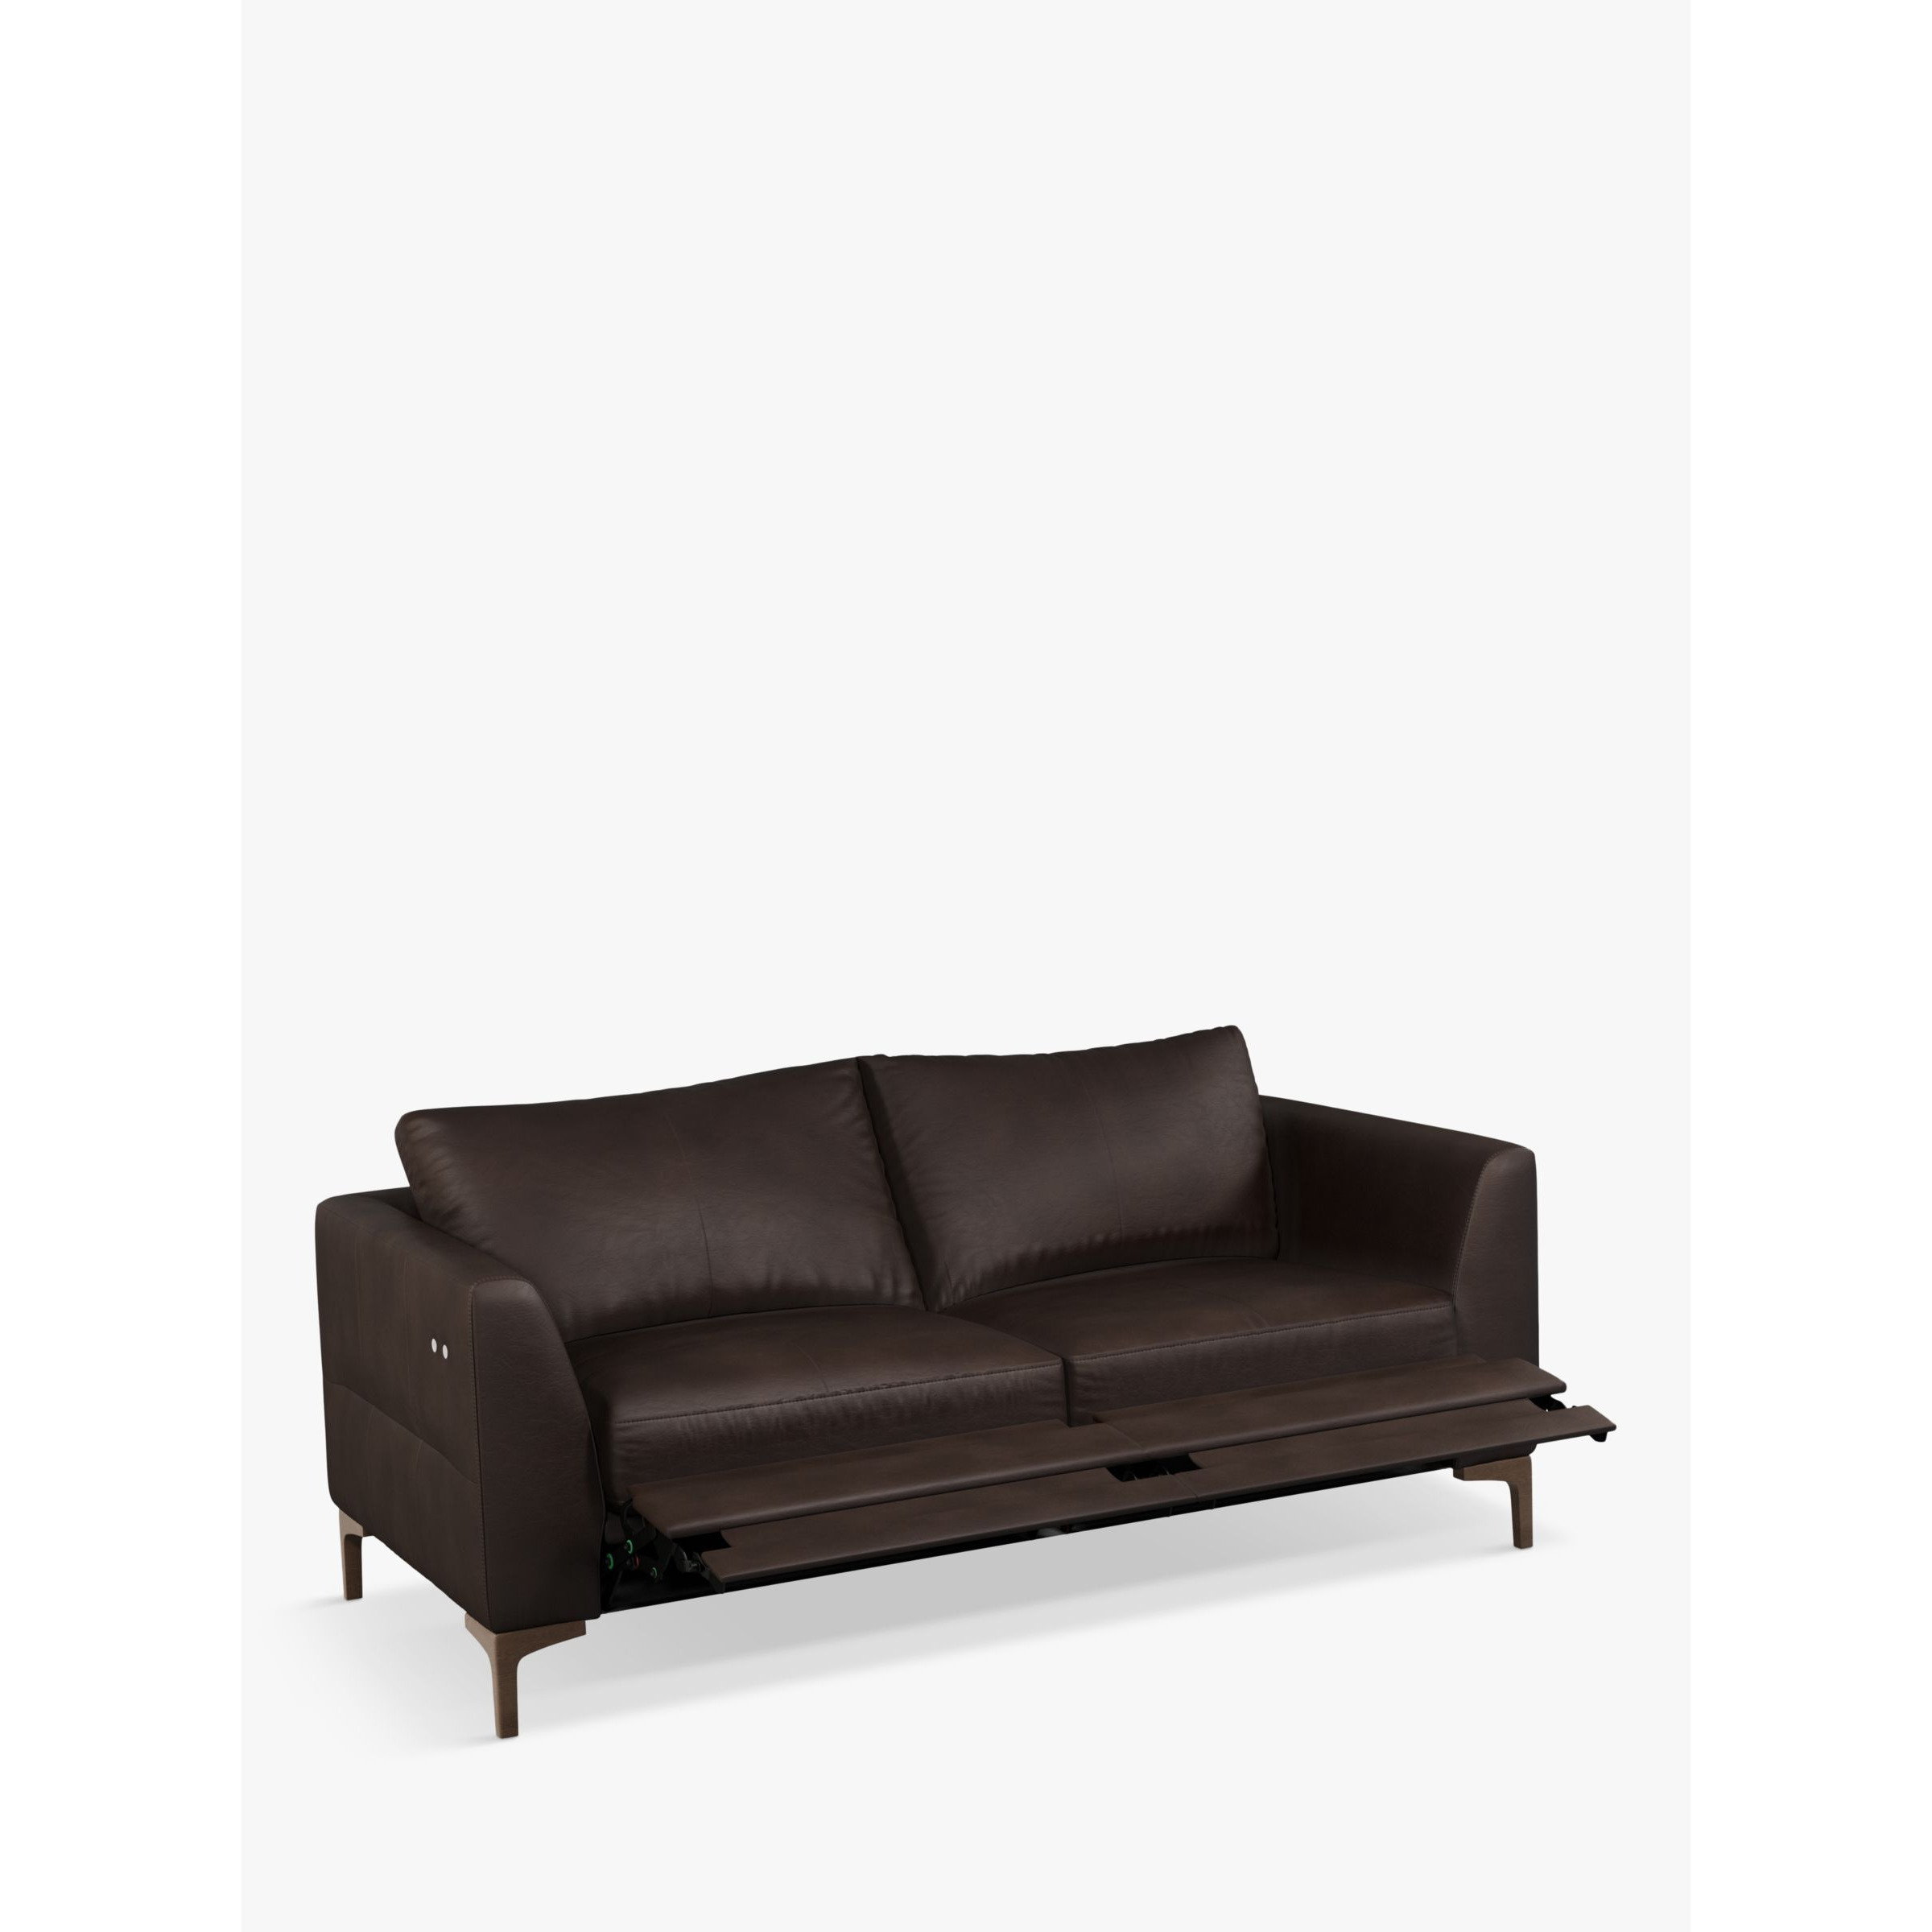 John Lewis Belgrave Motion Medium 2 Seater Leather Sofa with Footrest Mechanism, Dark Leg - image 1